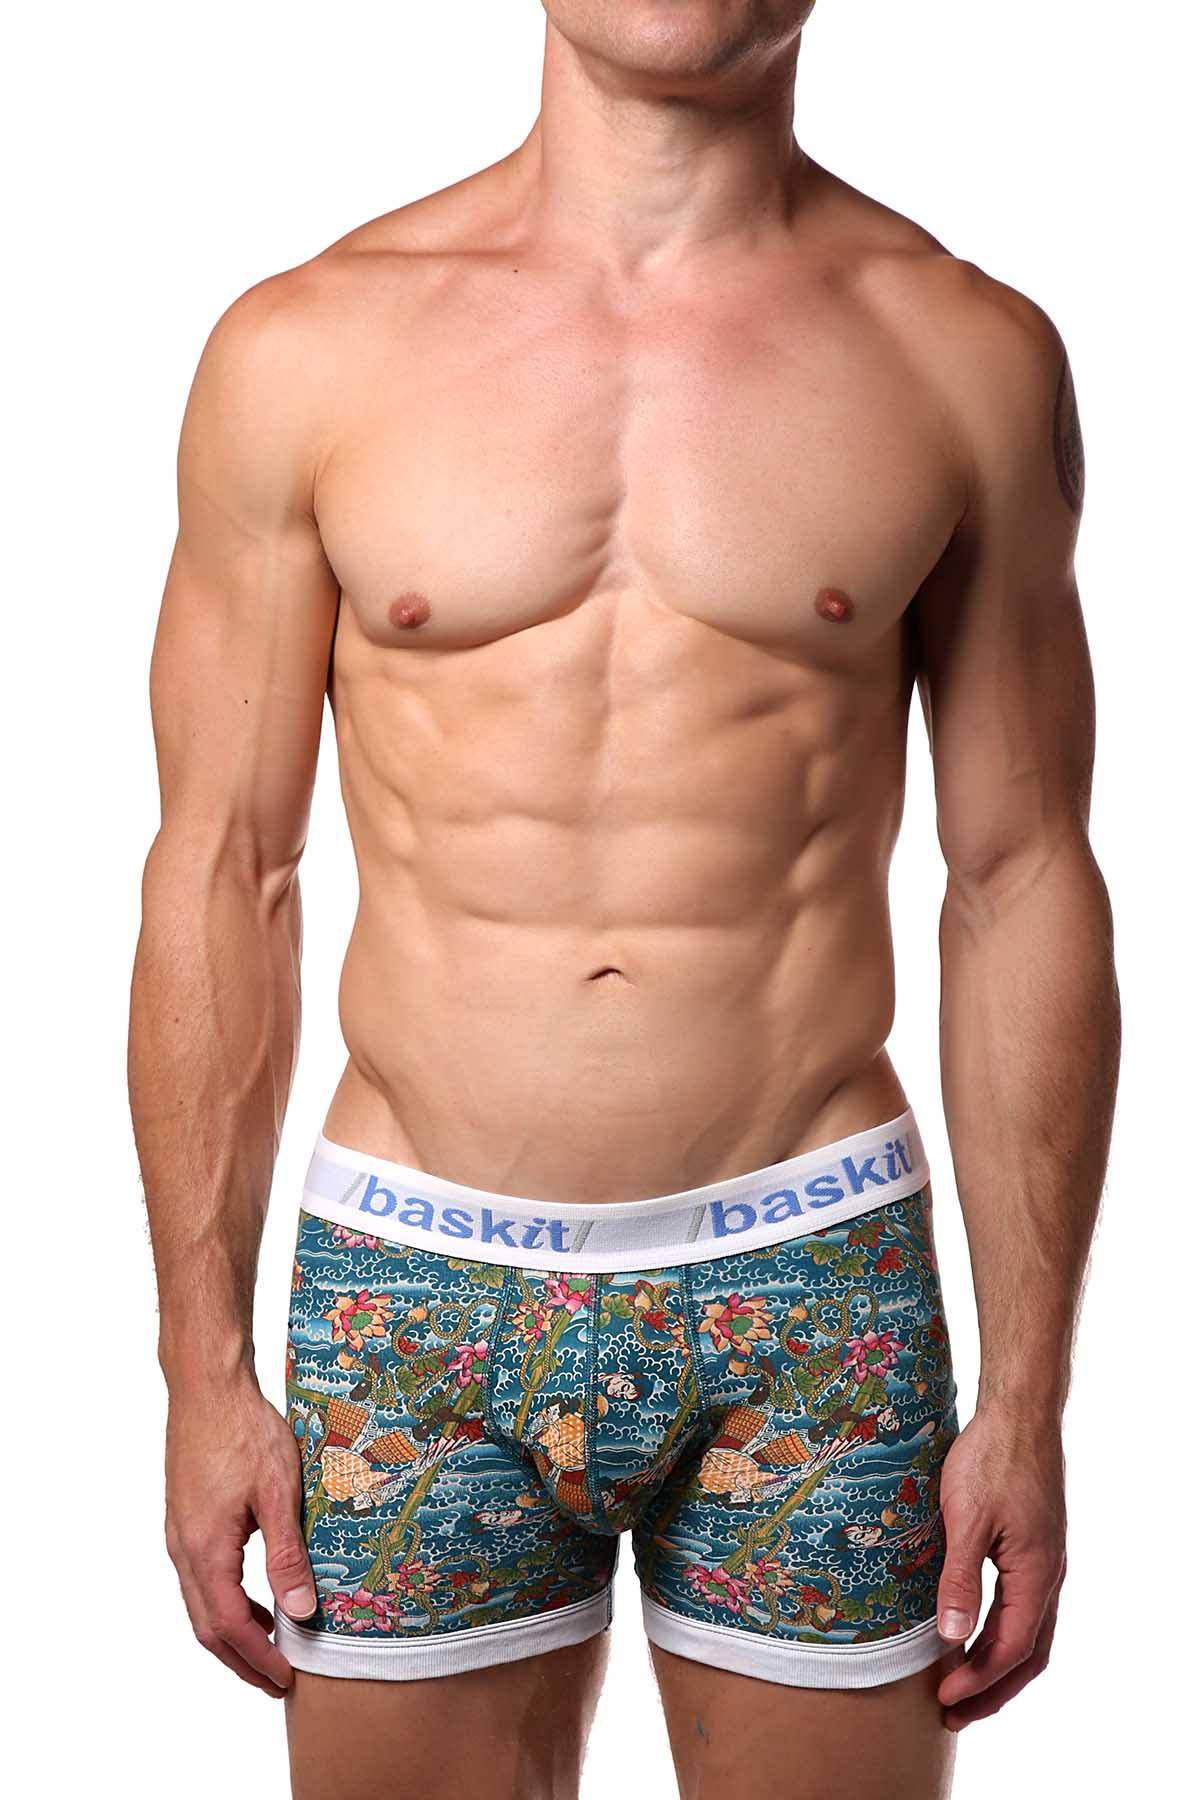 Baskit Cyan Body Art Boxer Brief